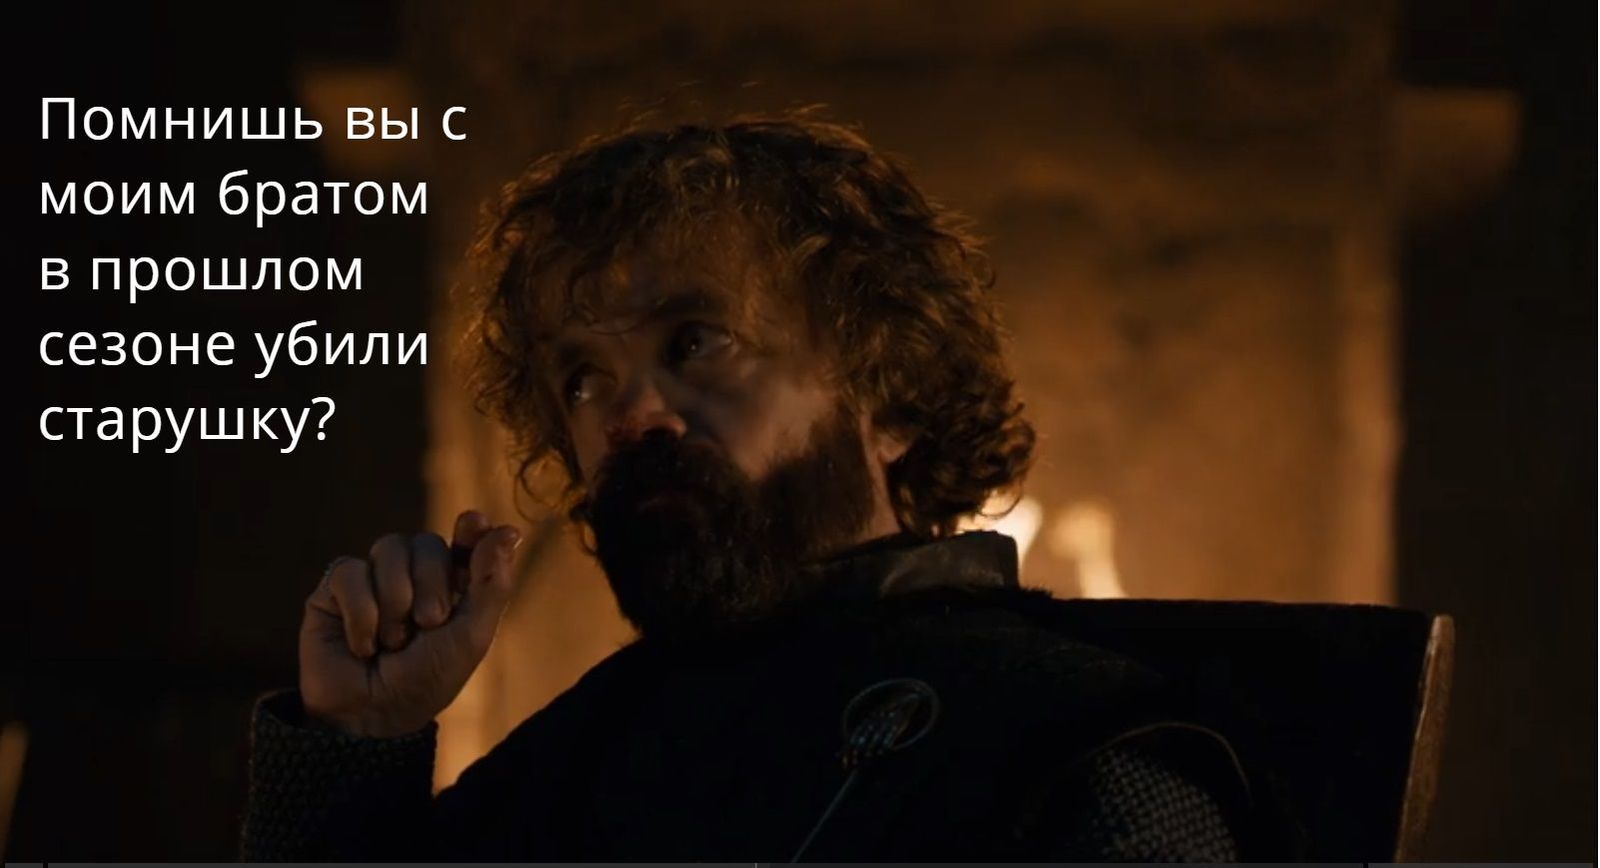 Mercenary Career - Game of Thrones, Bronn, Tyrion Lannister, Game of Thrones season 8, Longpost